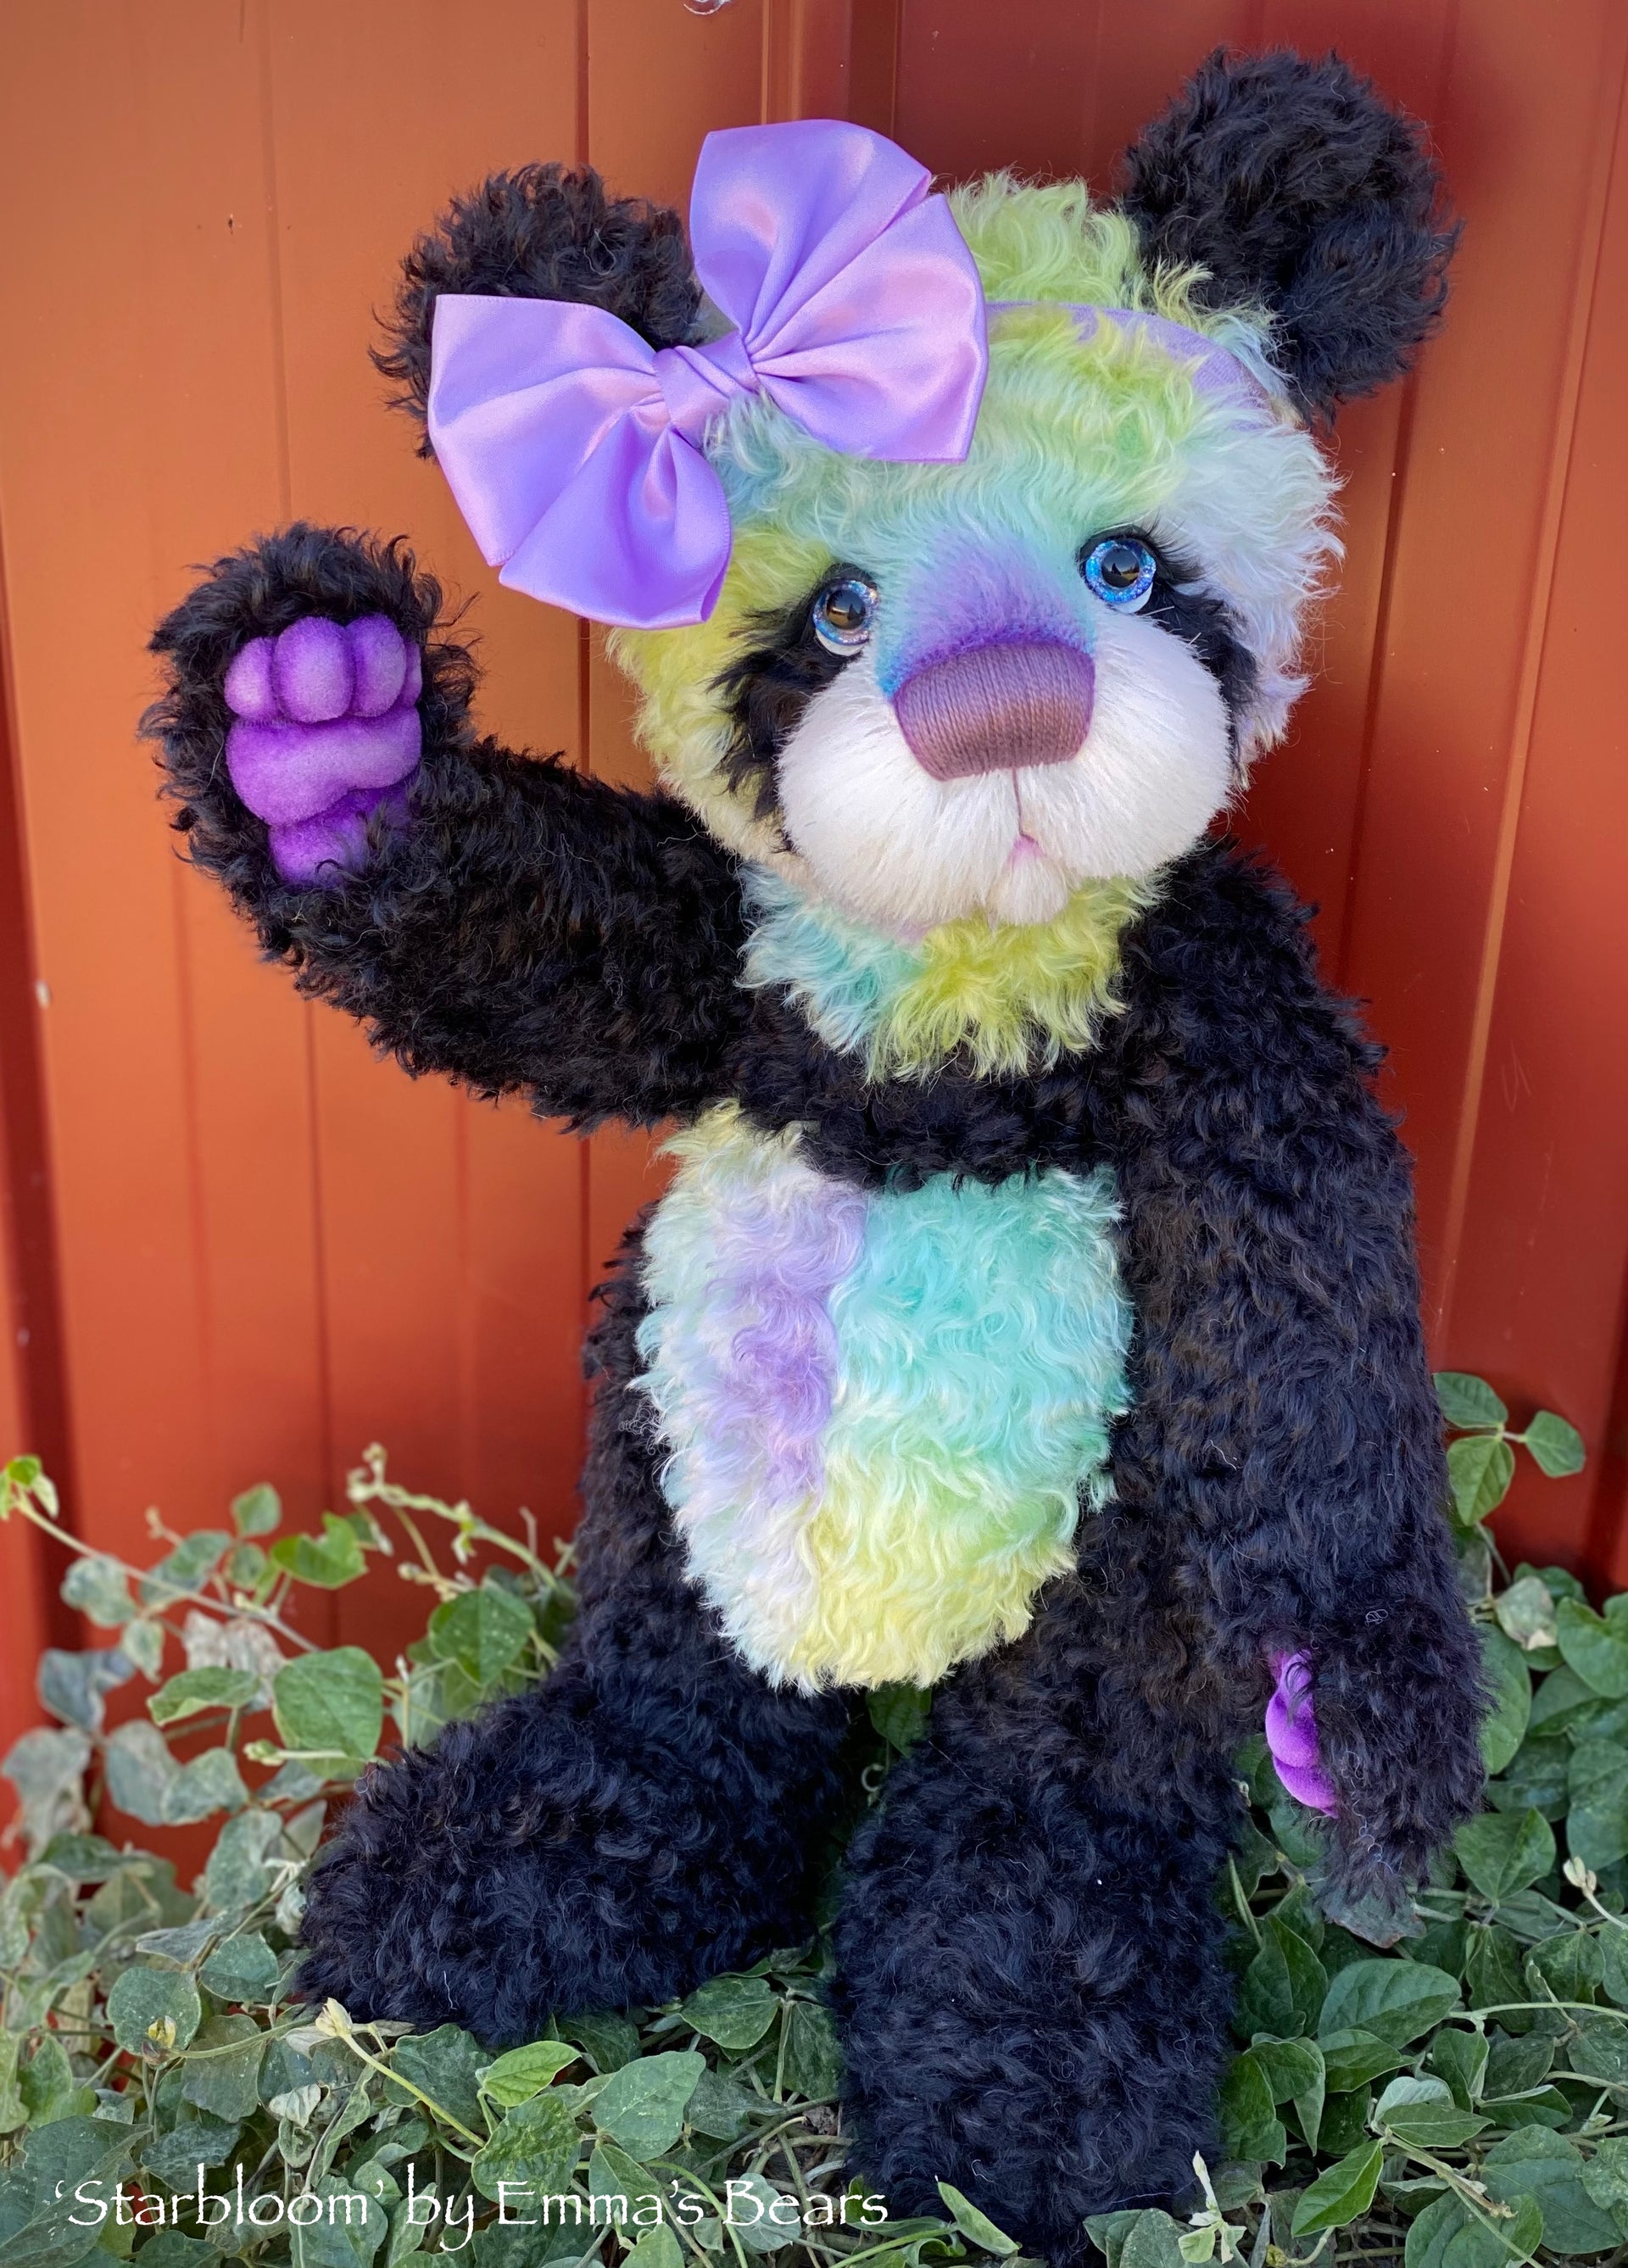 Starbloom - 16" Hand-dyed curly kid mohair Artist Bear by Emmas Bears - OOAK